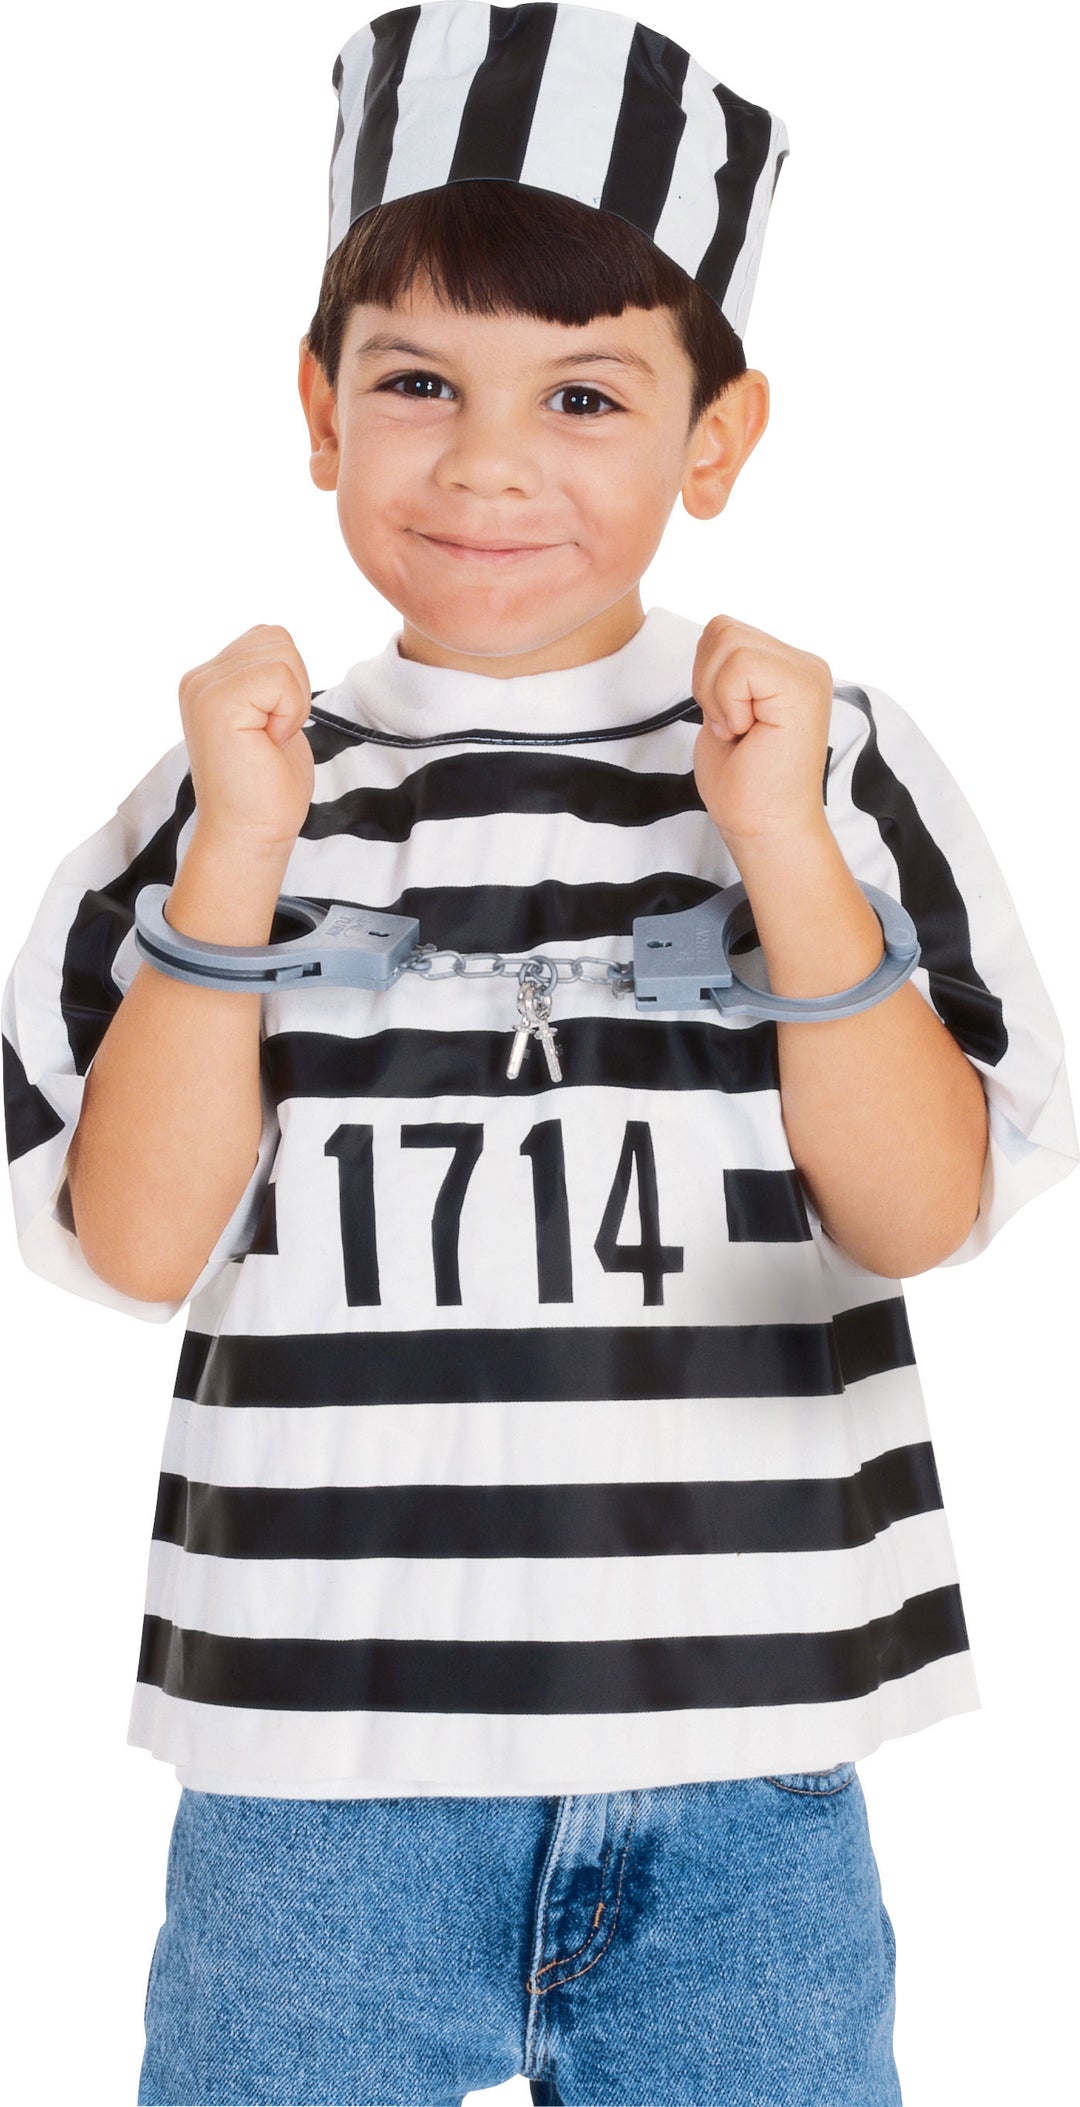 Childs Costume Set - Prisoner